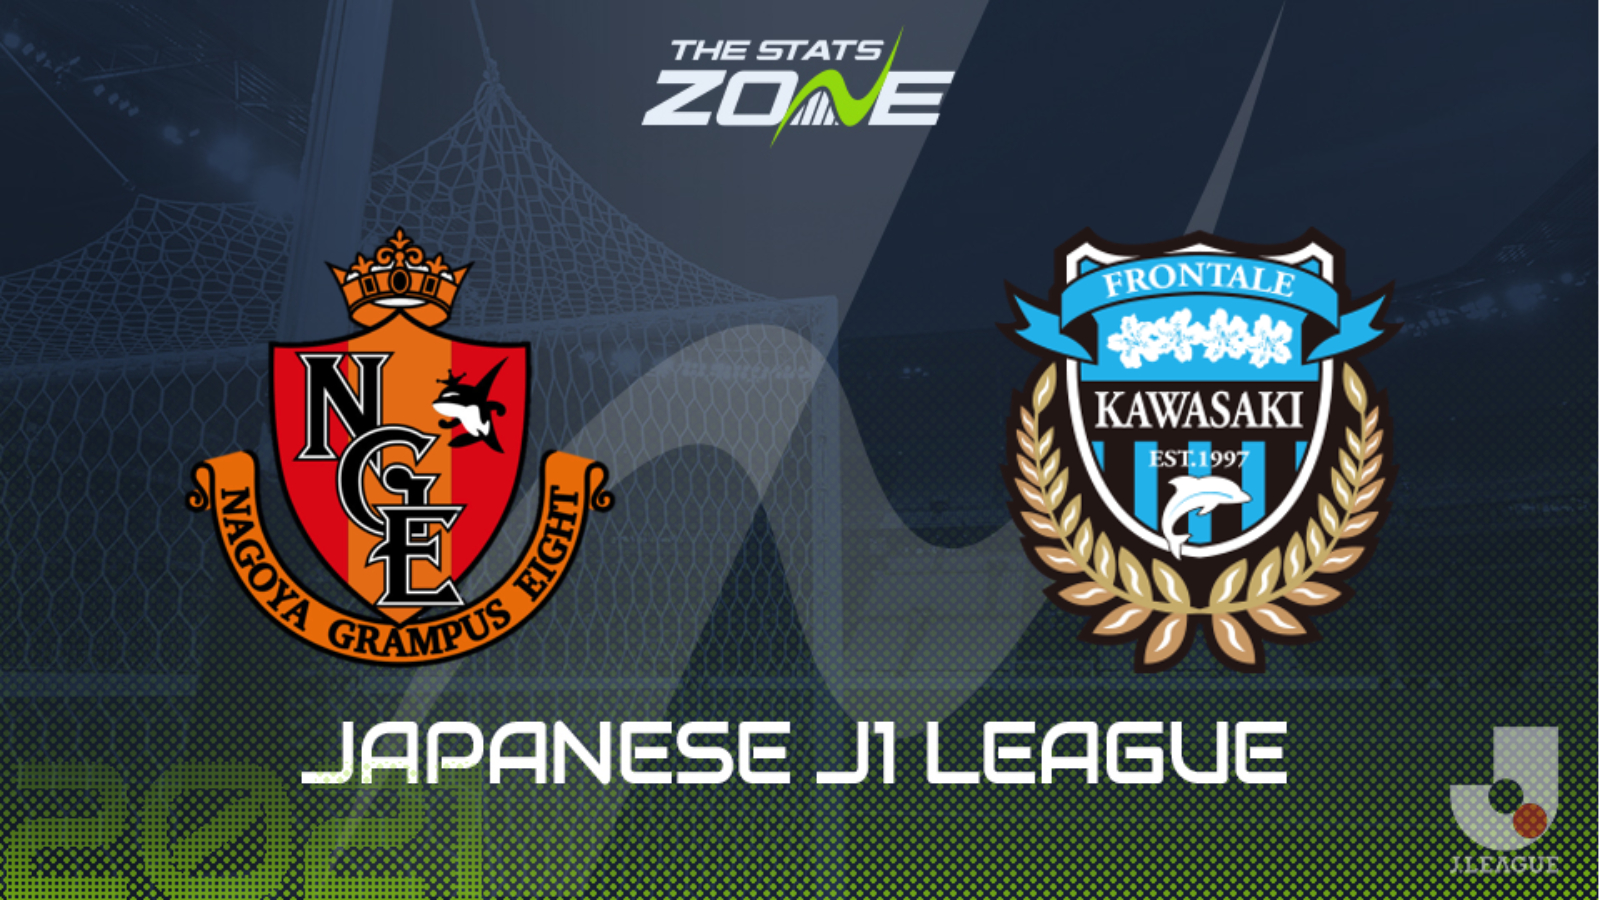 2021 Japanese League – Nagoya Grampus vs Kawasaki Frontale Preview & Prediction - The Zone